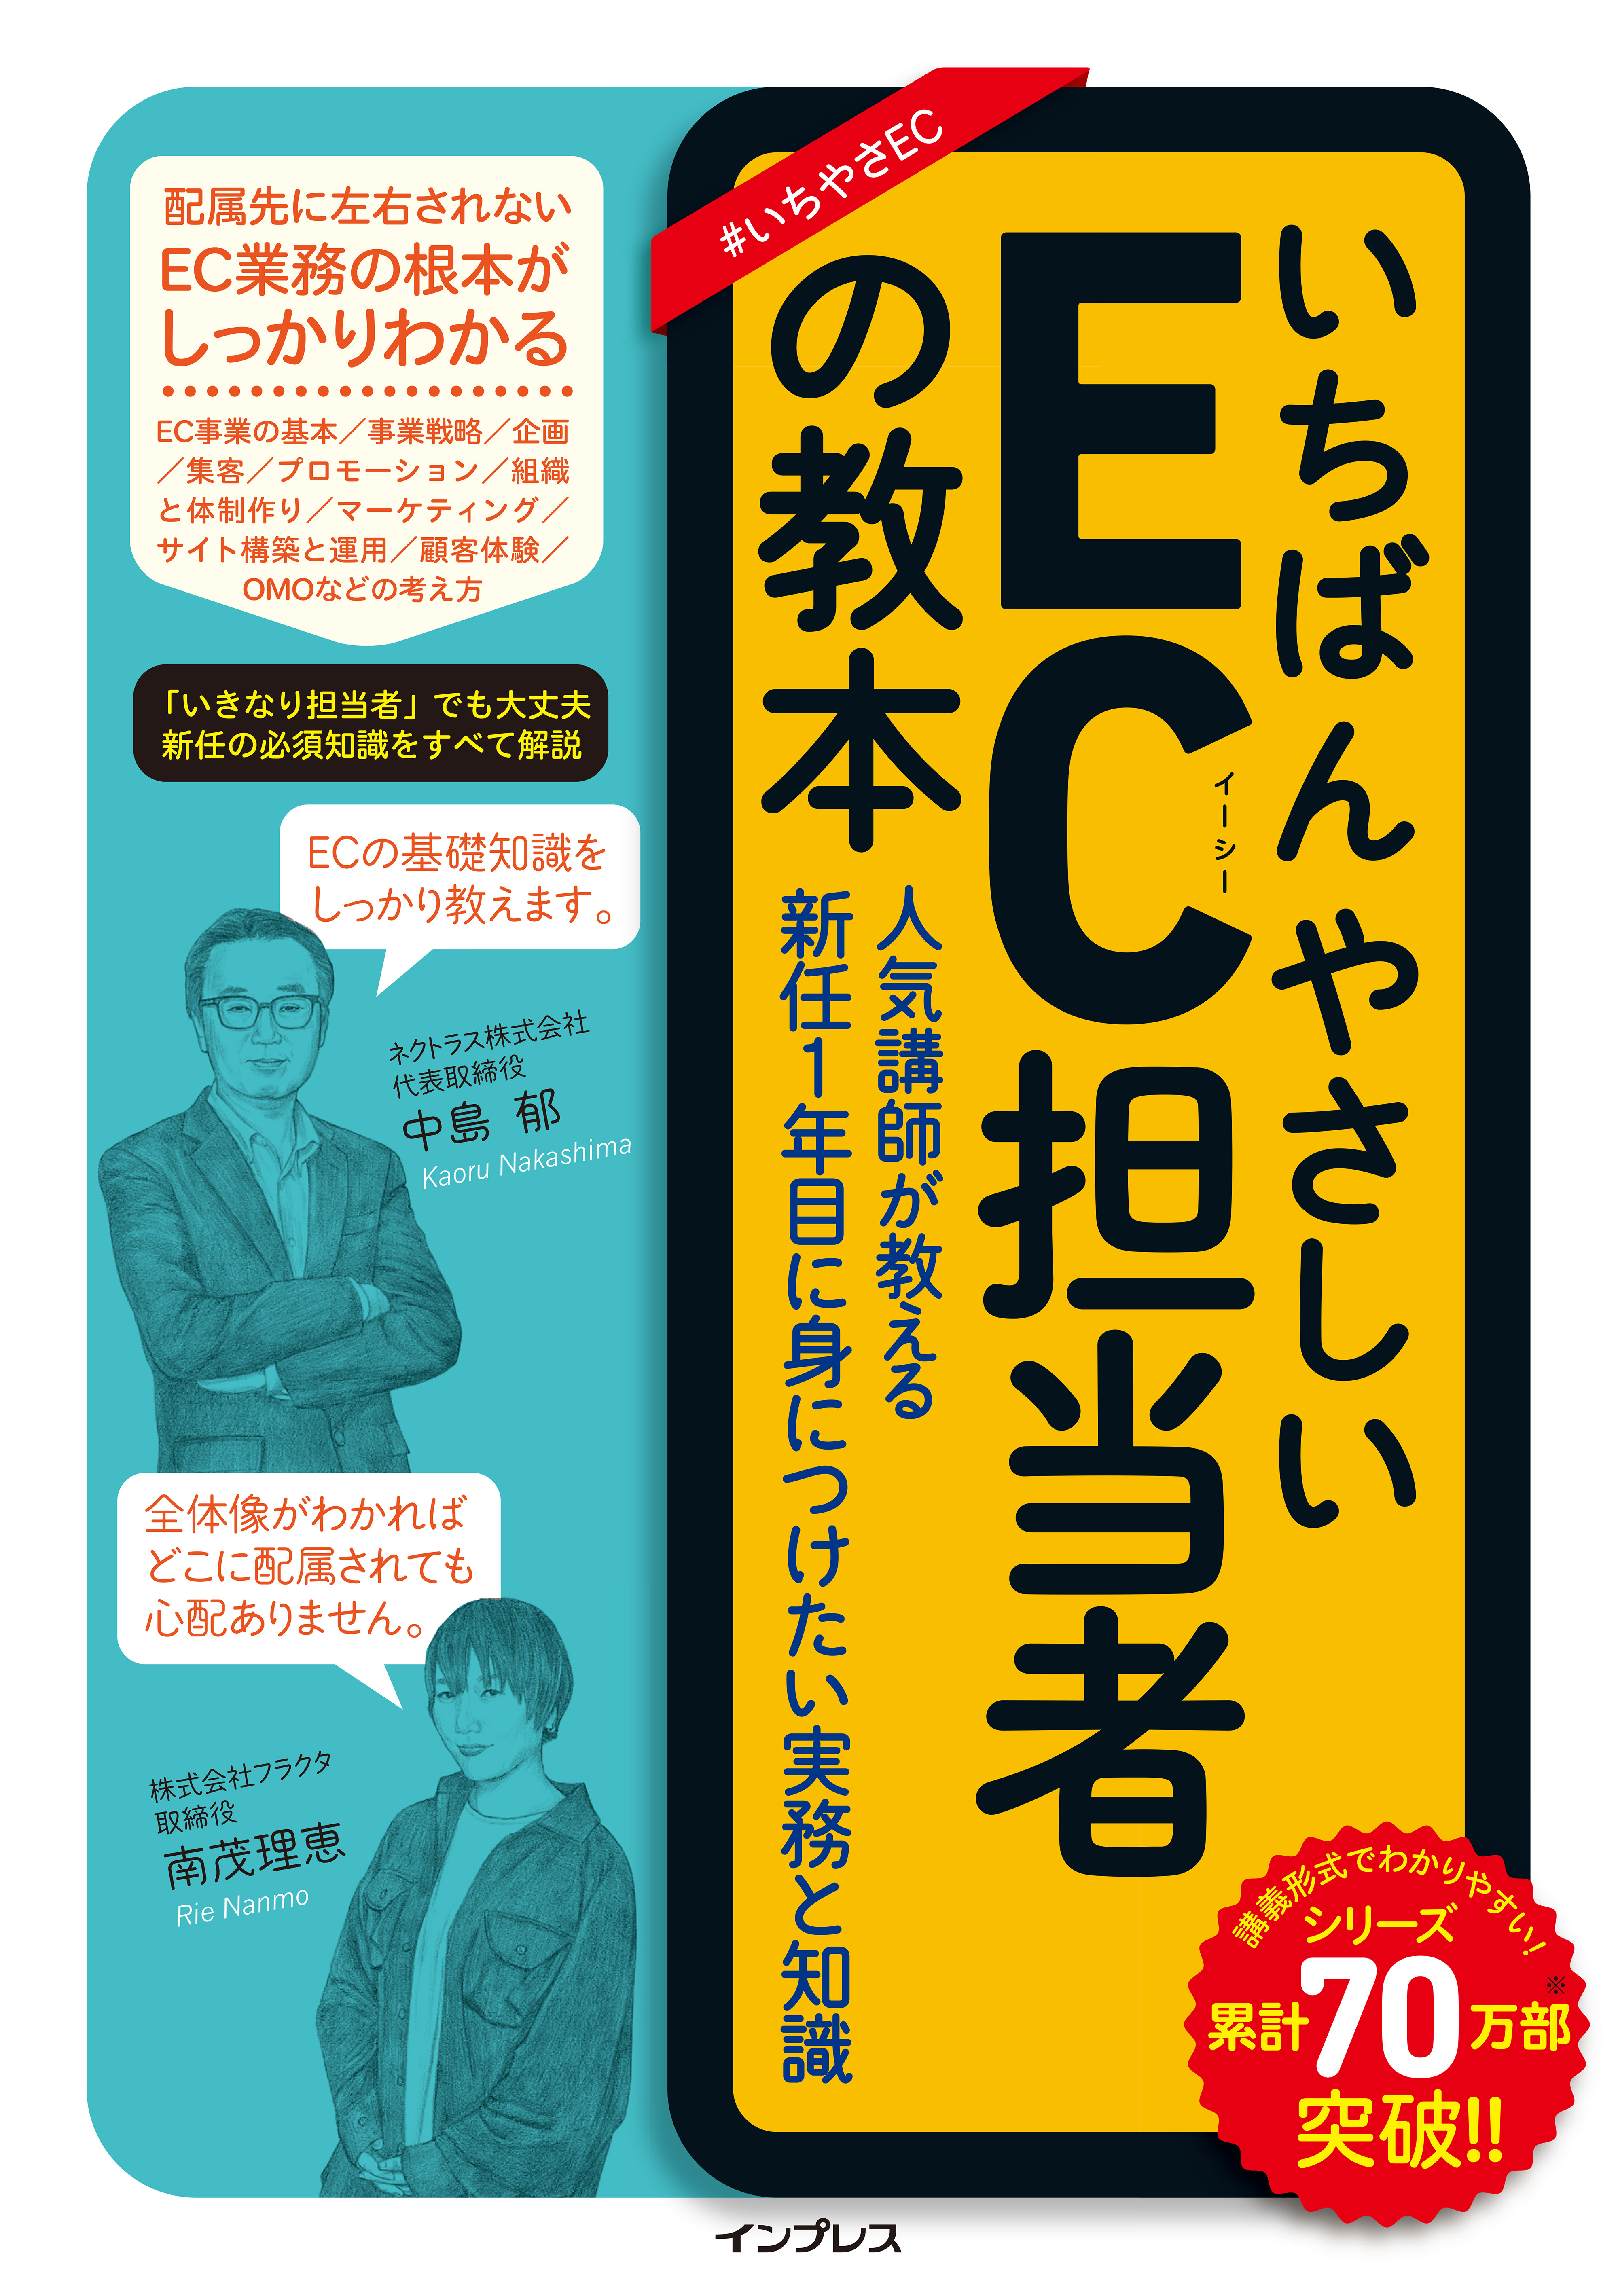 EC担当者向けに基礎知識を網羅的に解説した1冊 『いちばんやさしいEC